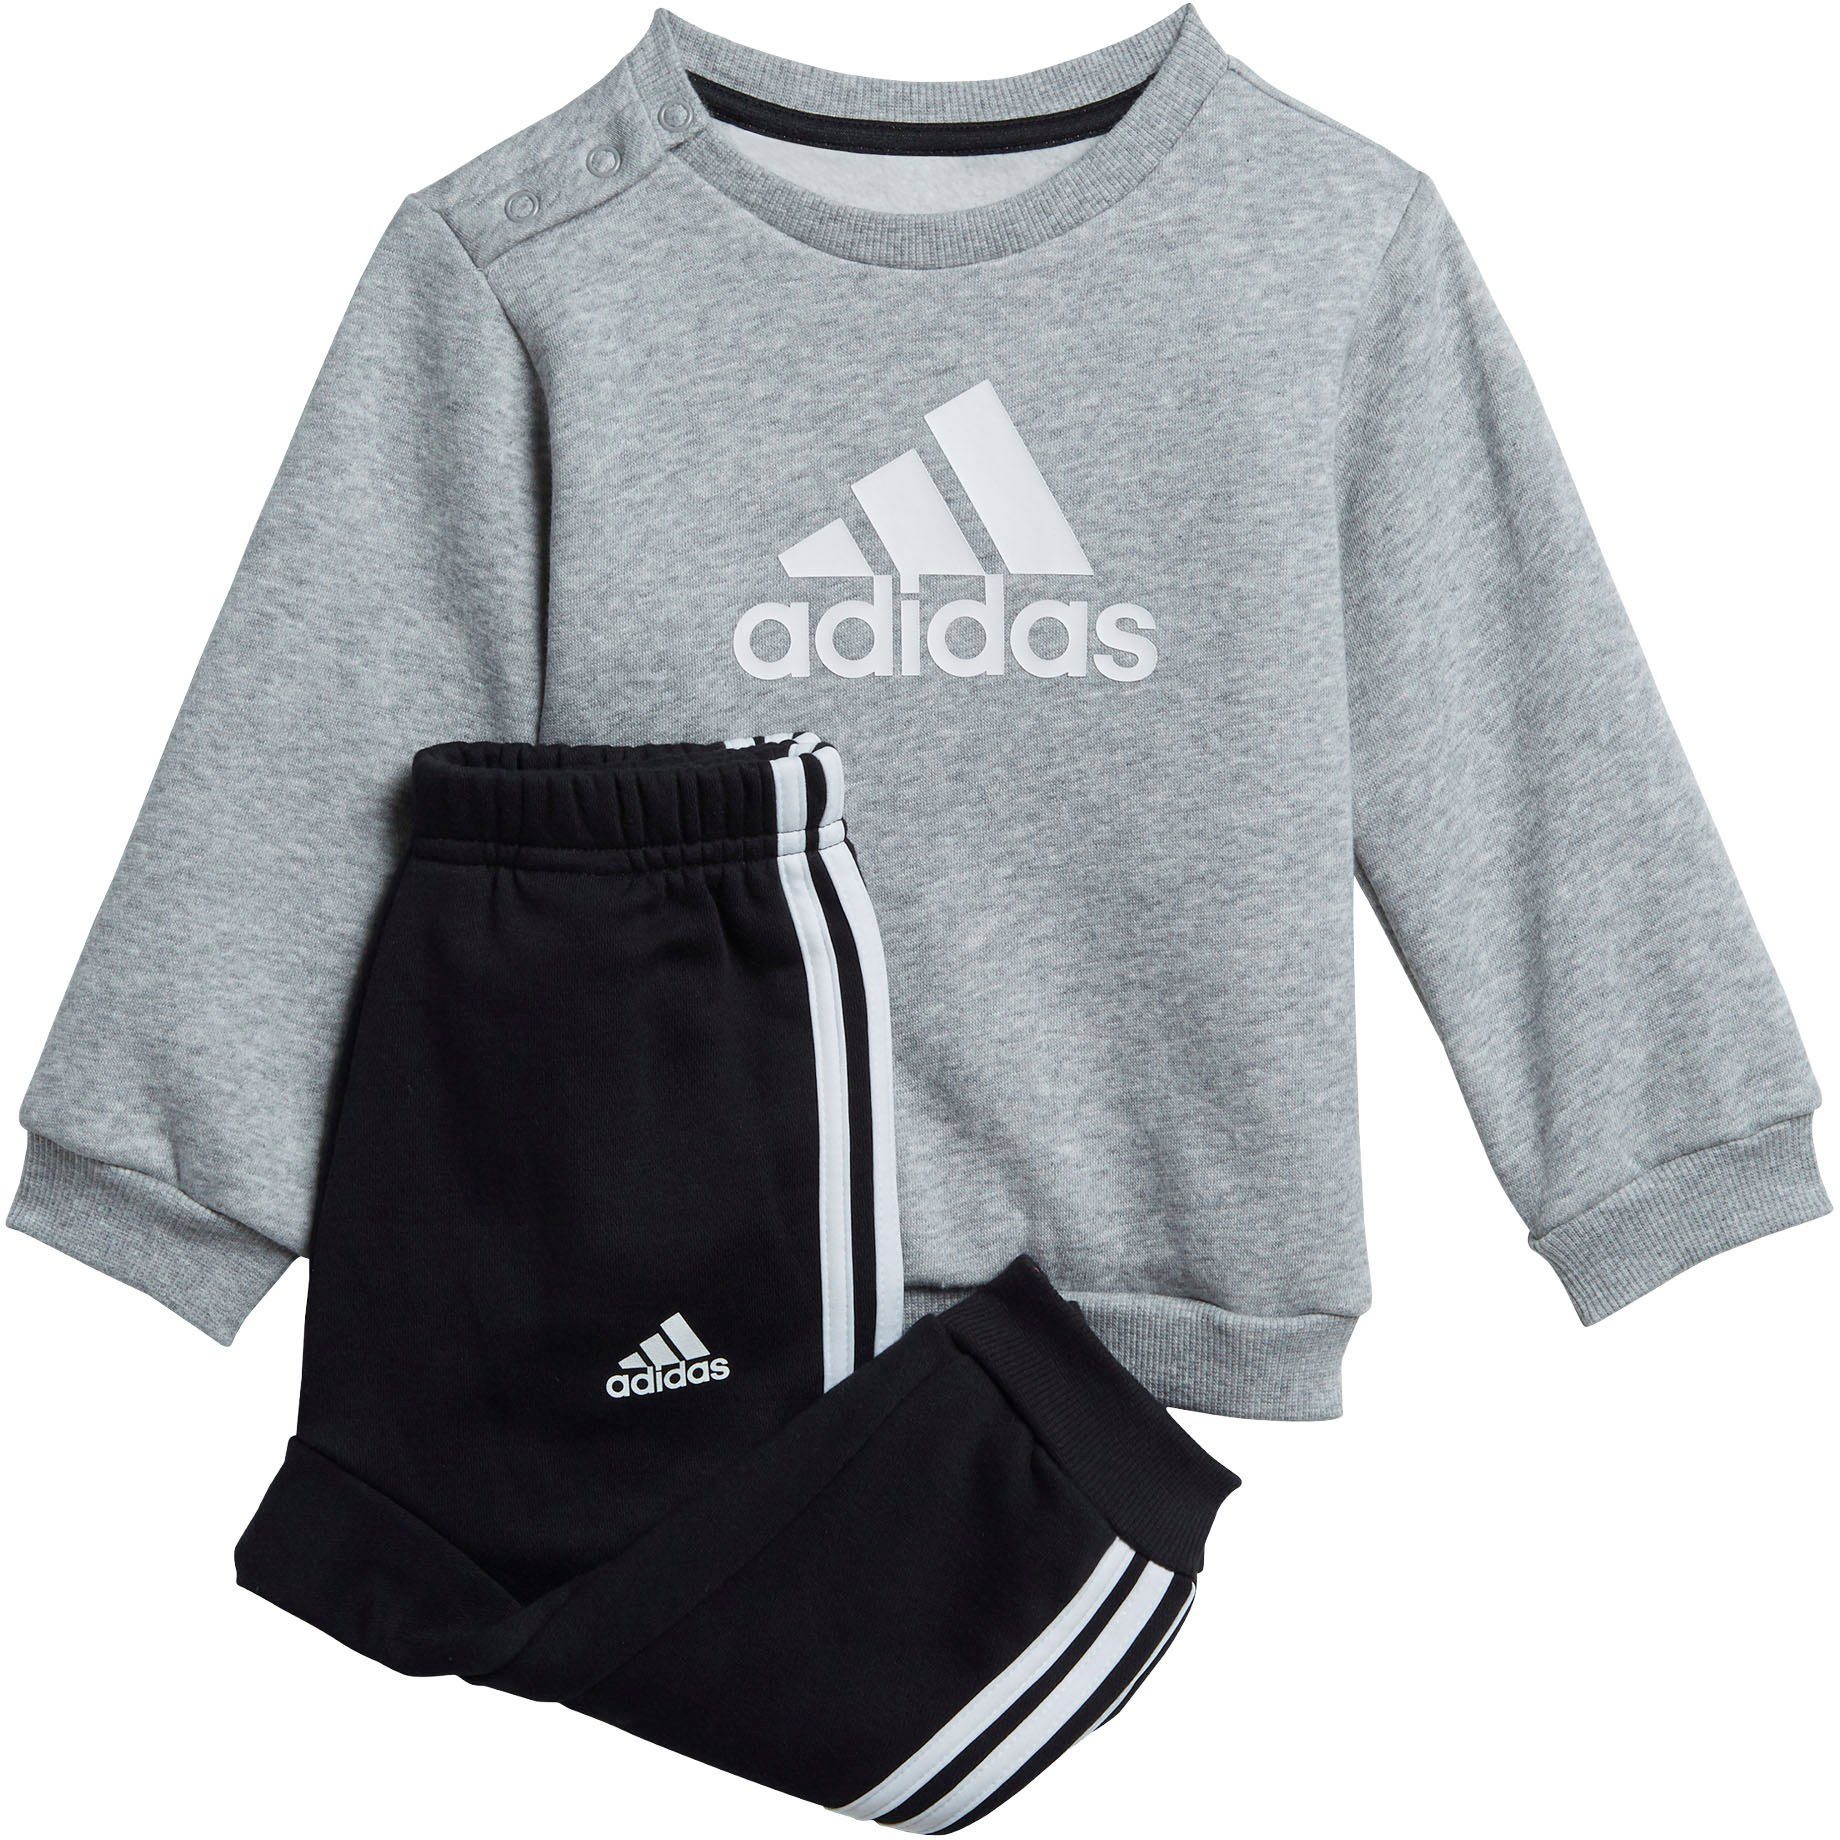 adidas Trainingsanzug Baby online kaufen | OTTO